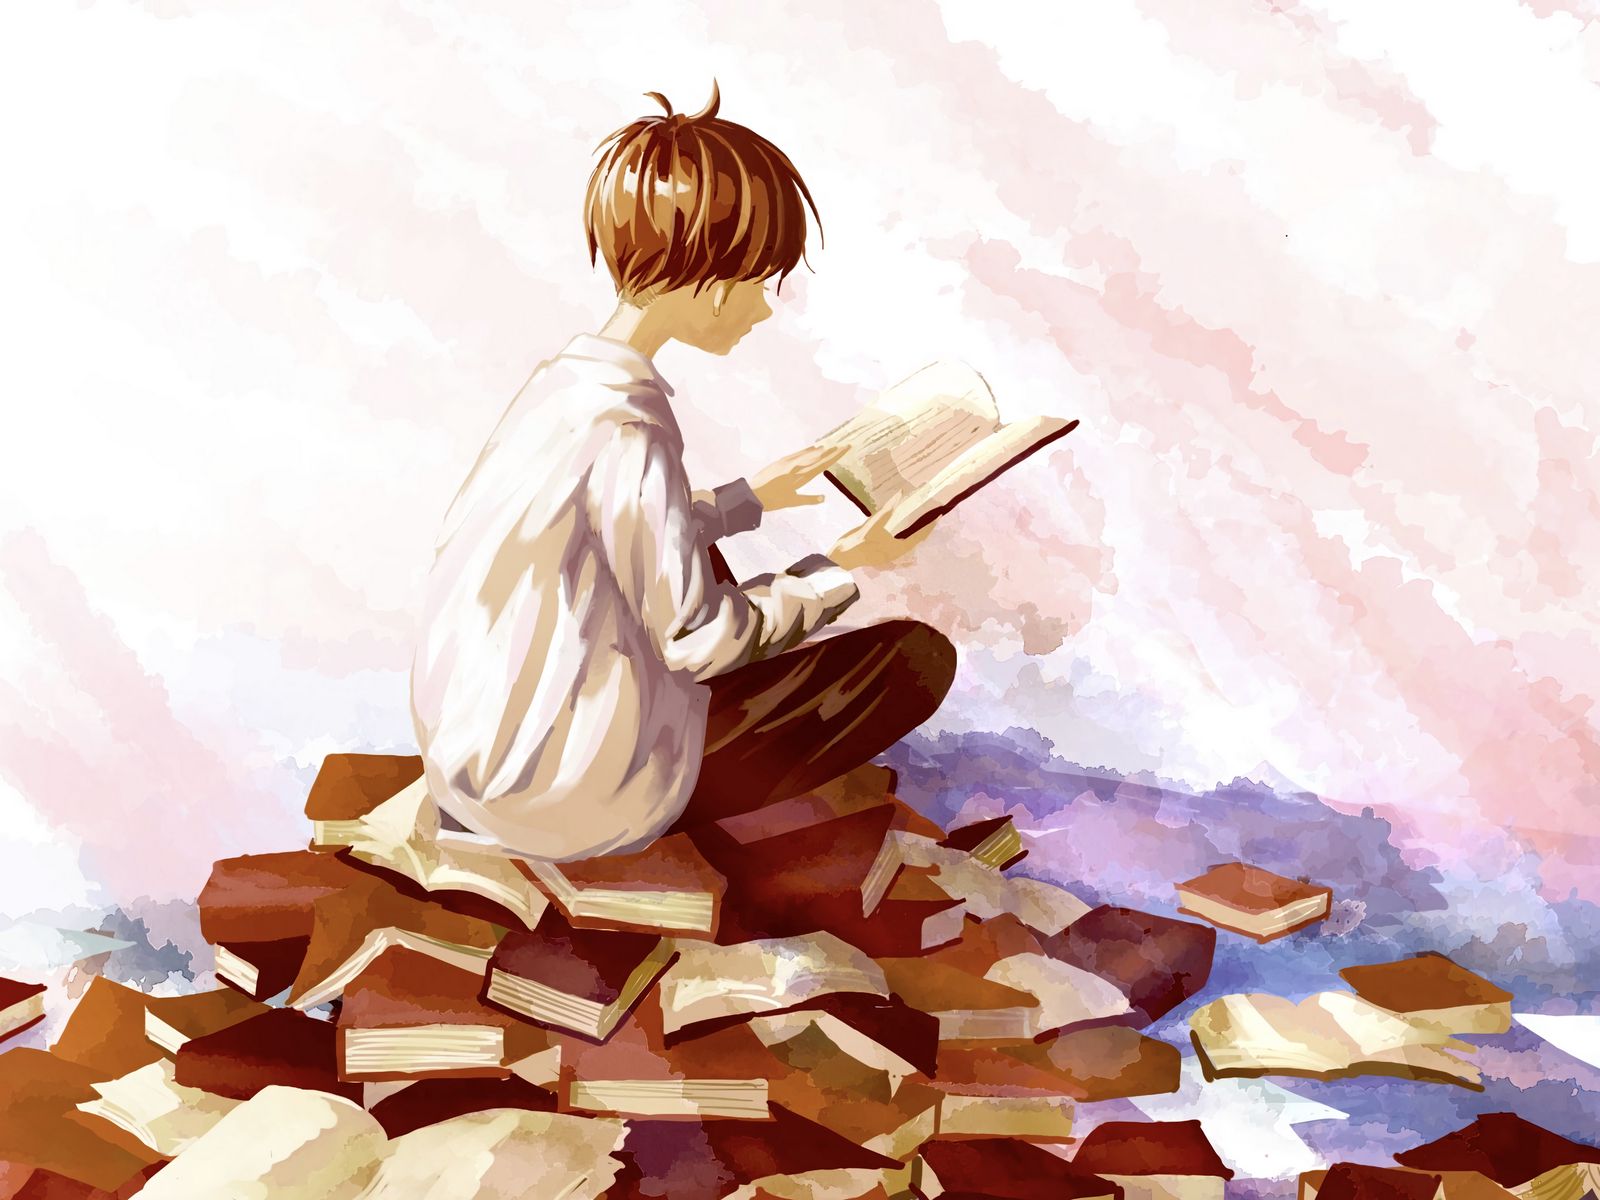 Download wallpaper 1600x1200 guy books reading anime art standard 43  hd background